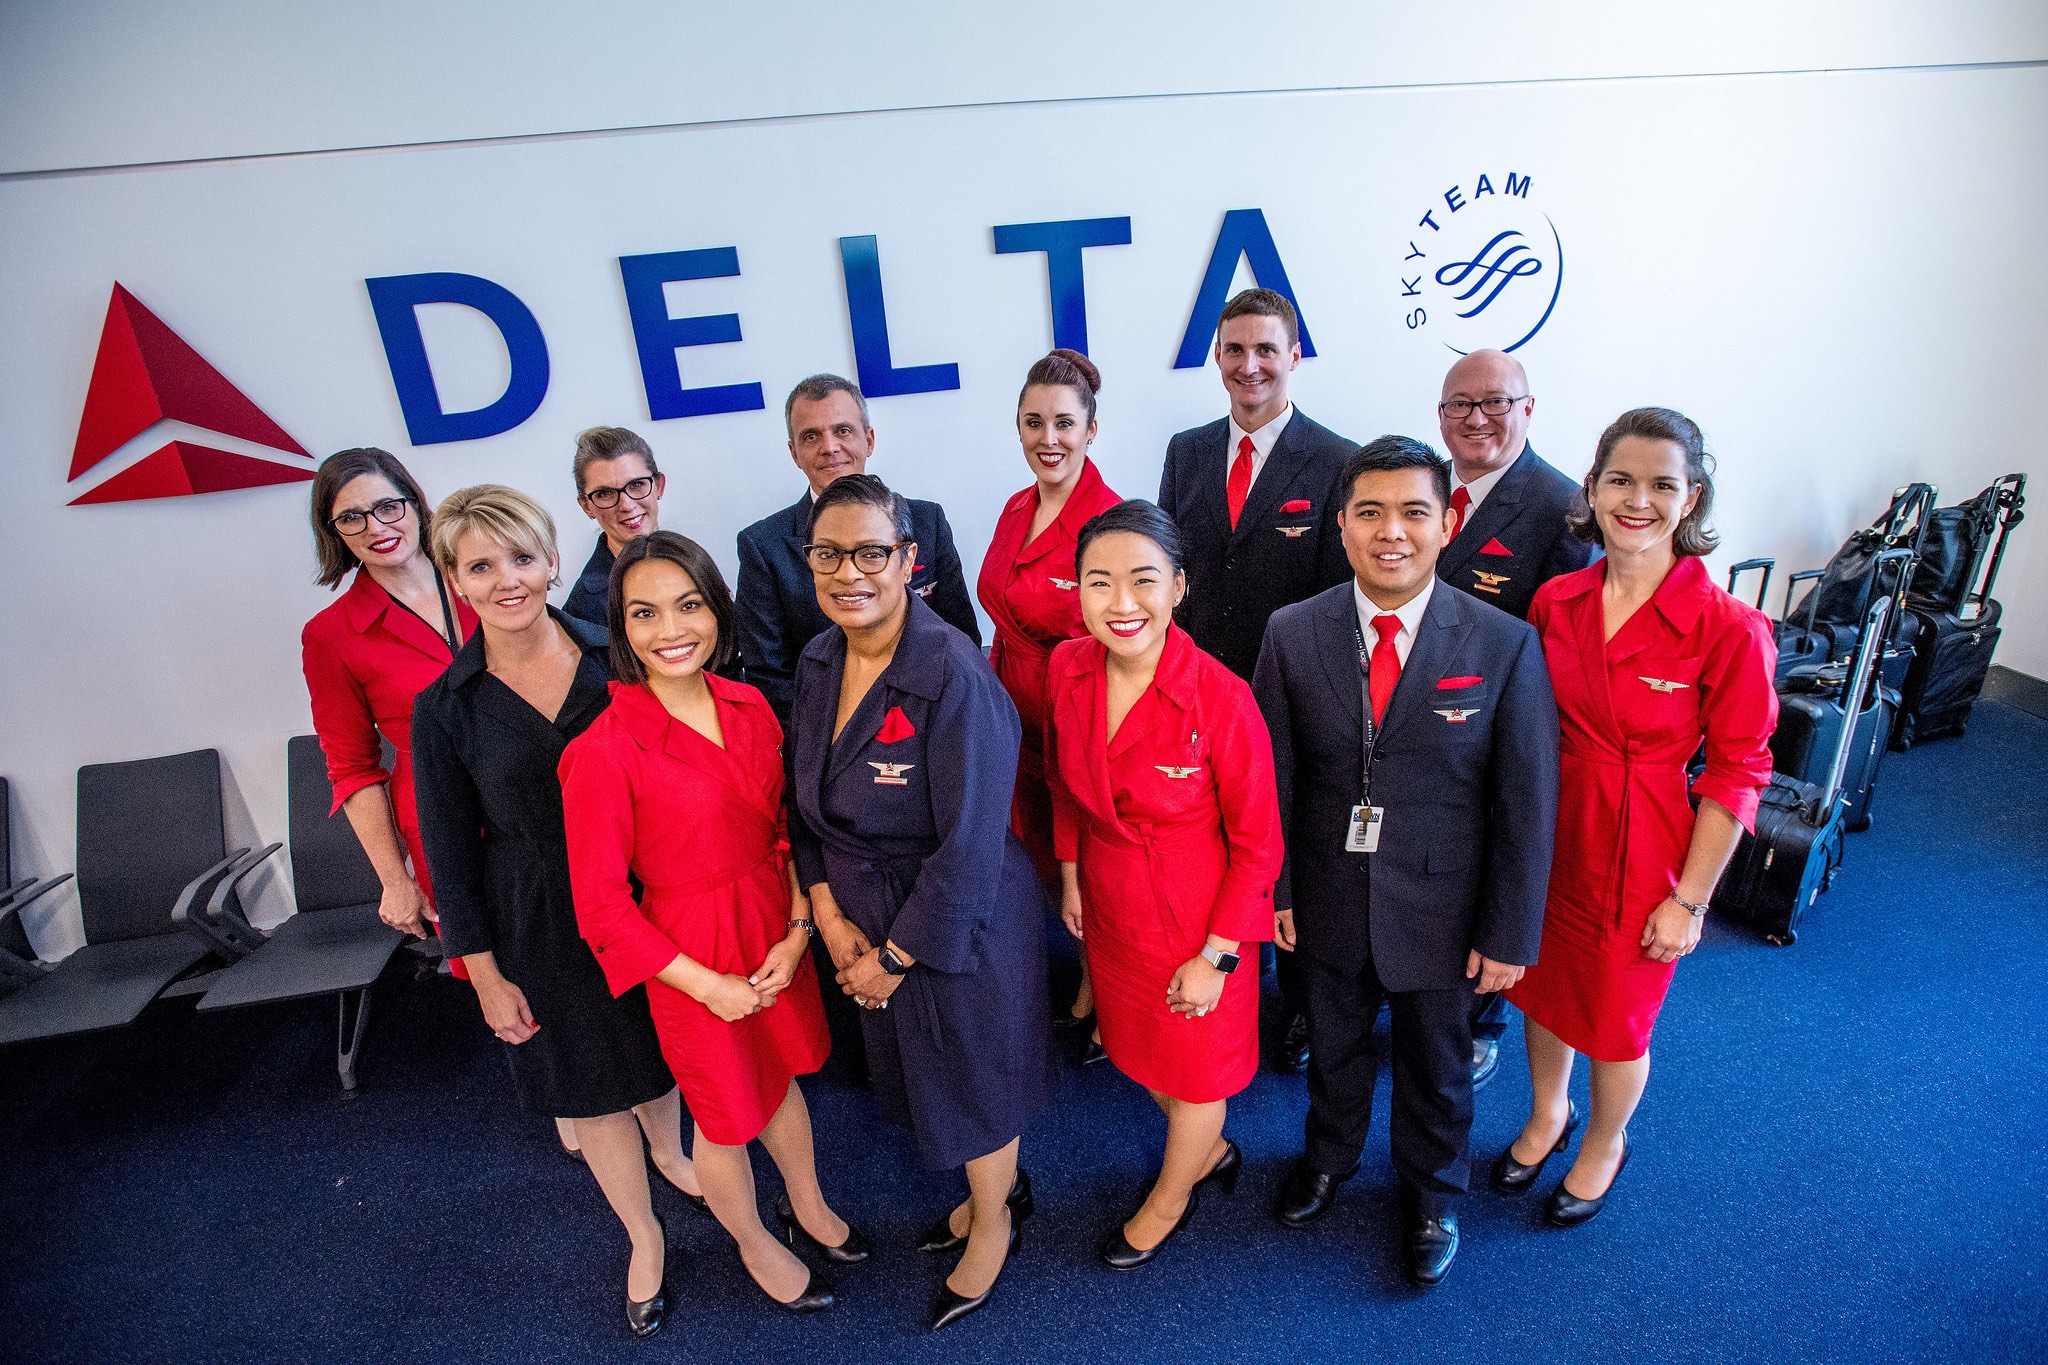 delta airlines remote jobs